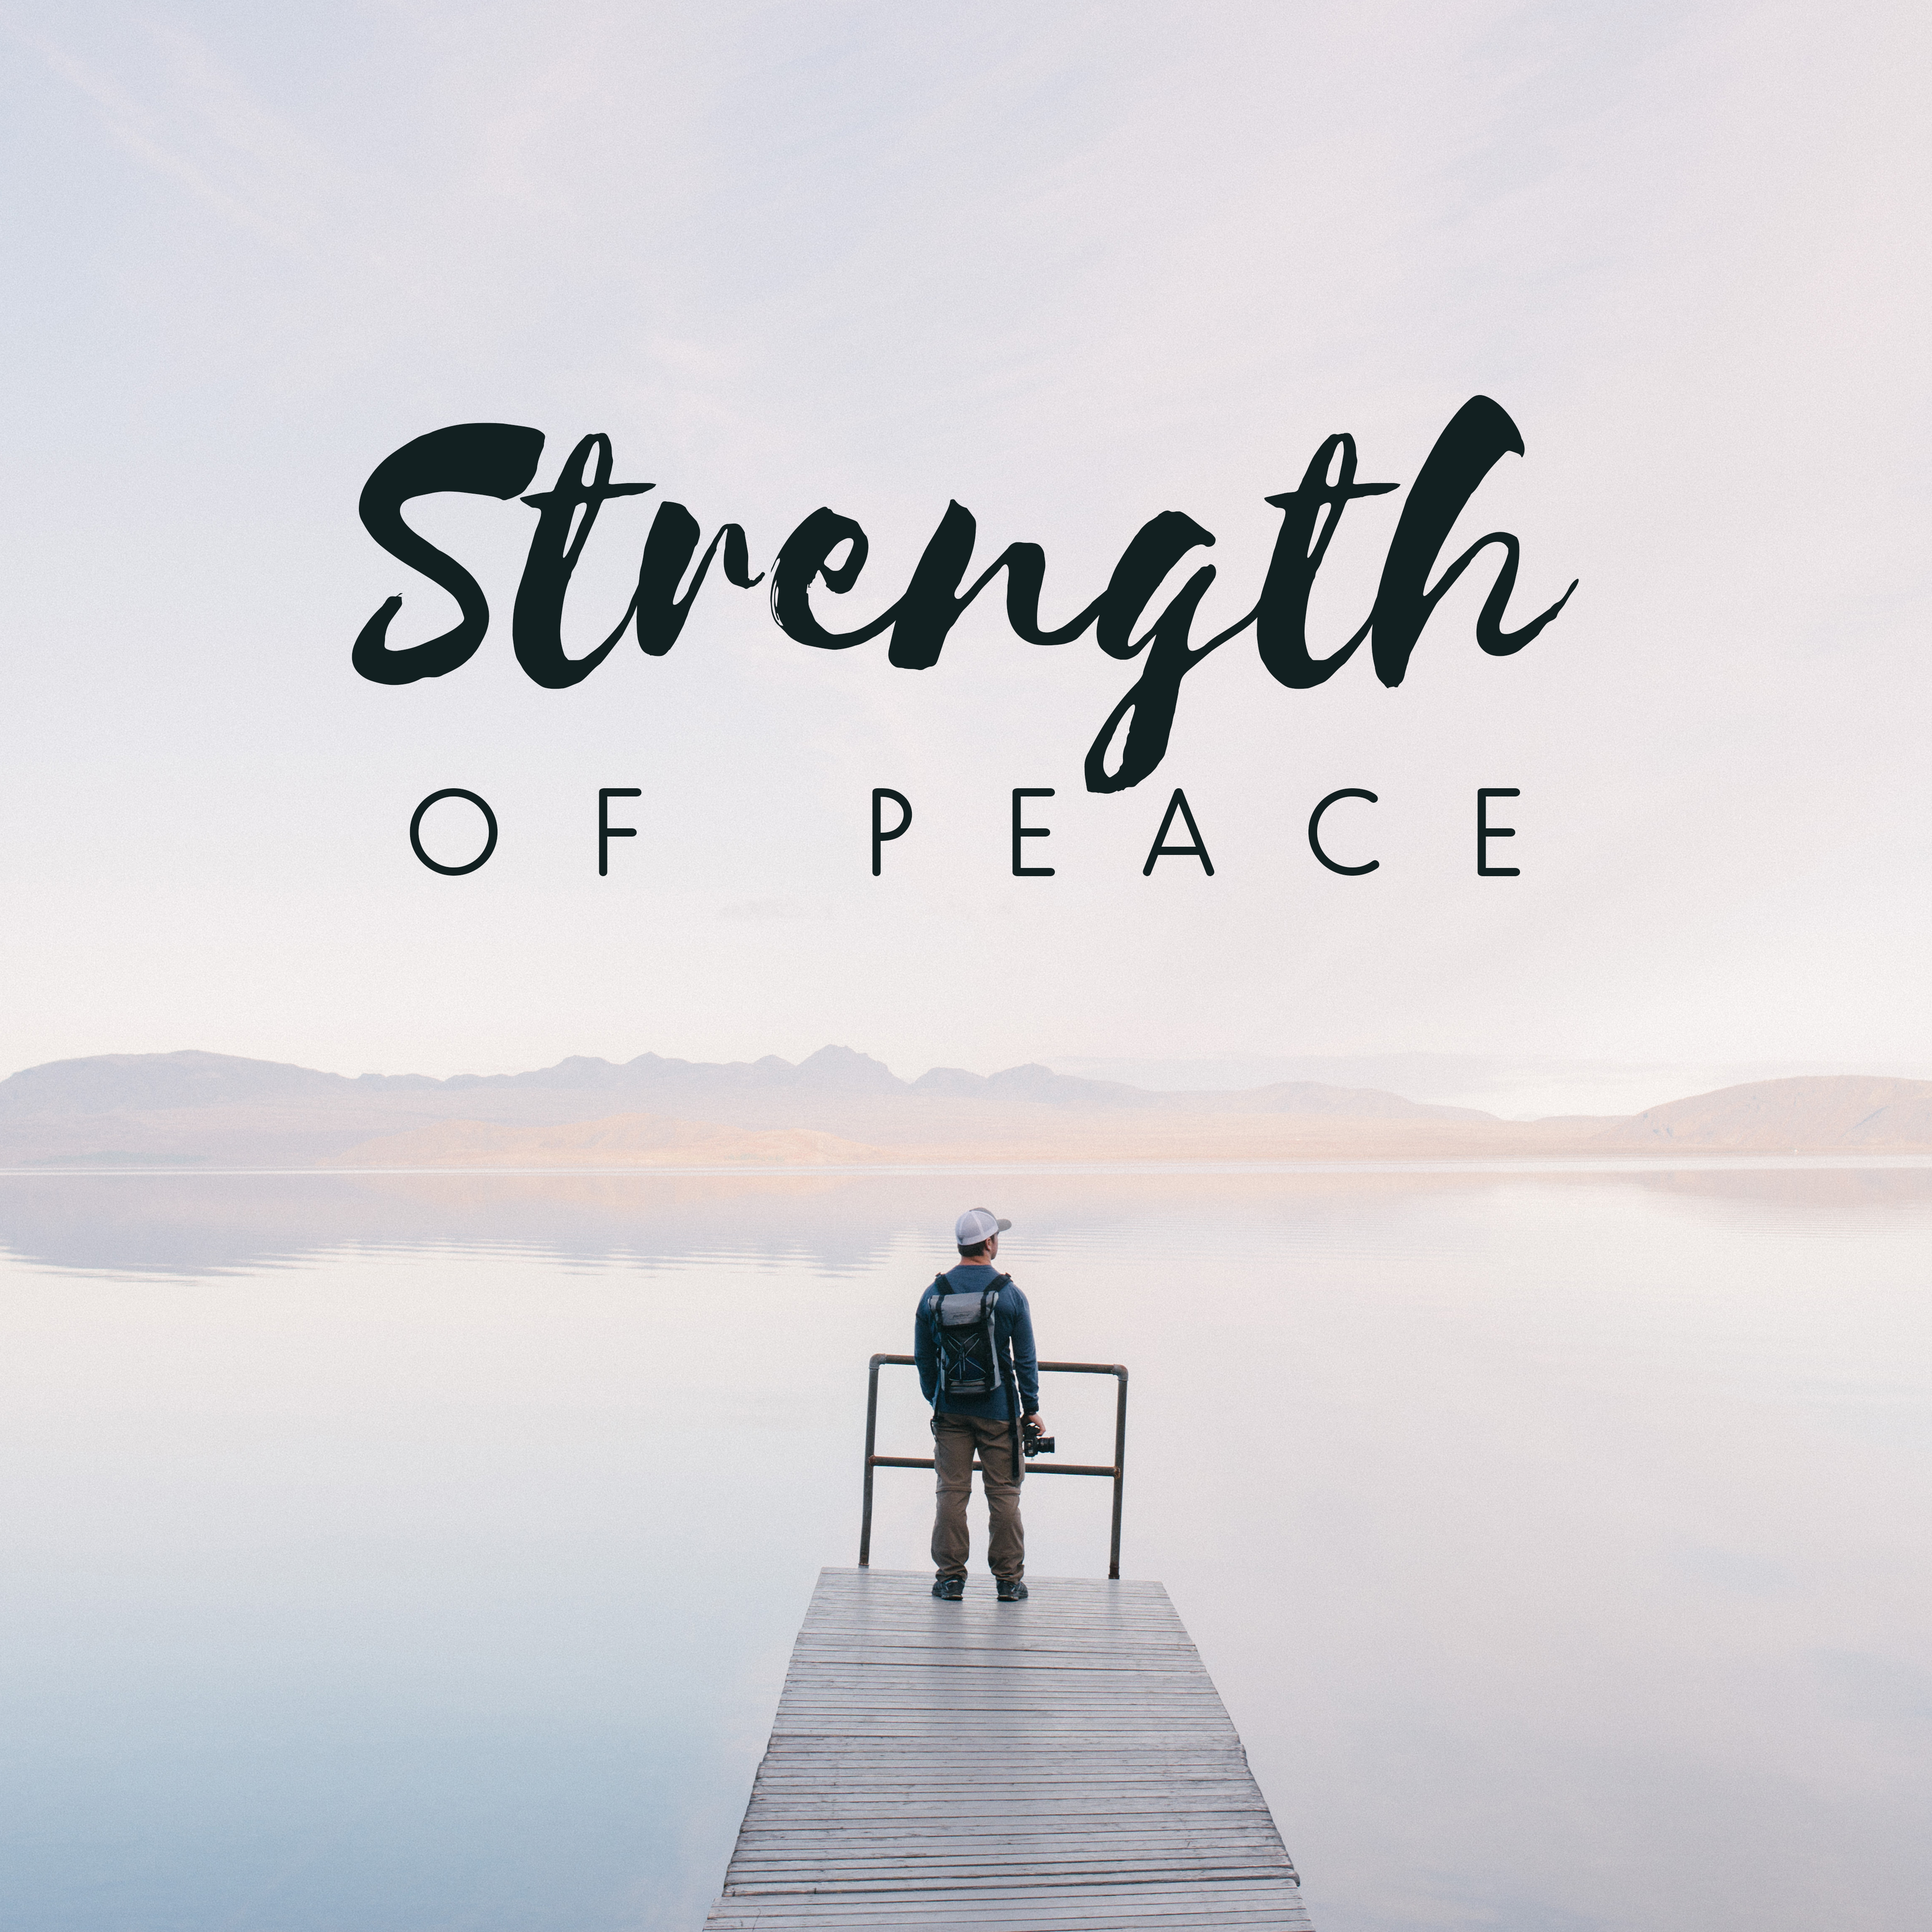 Strength of Peace